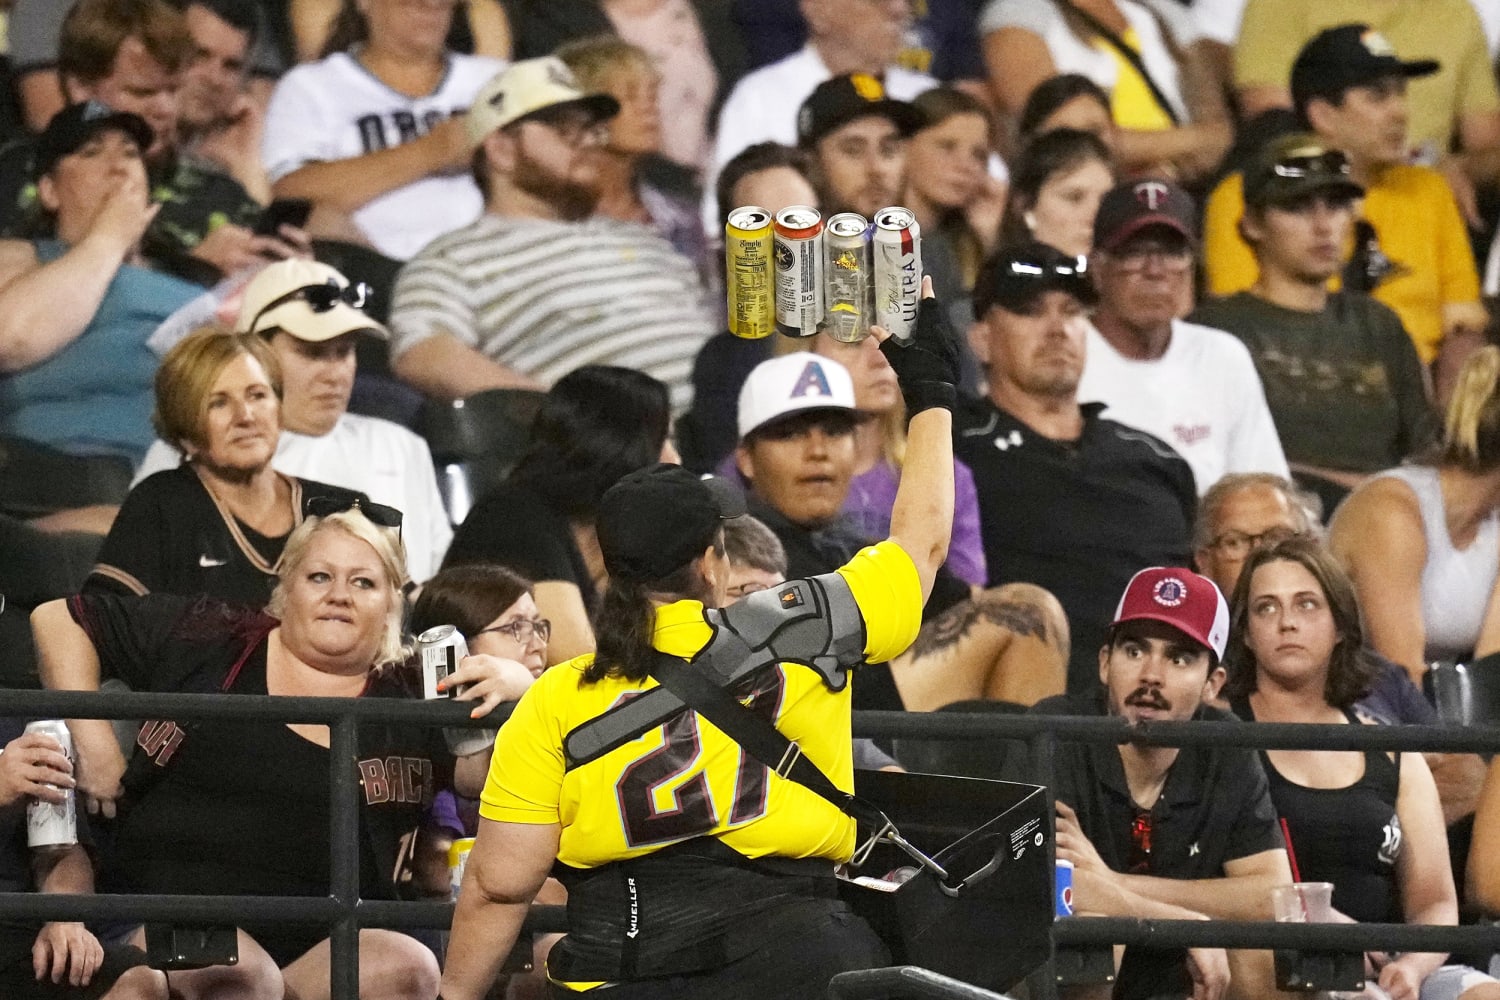 Major League Baseball teams extend beer sales after pitch clock shortens games